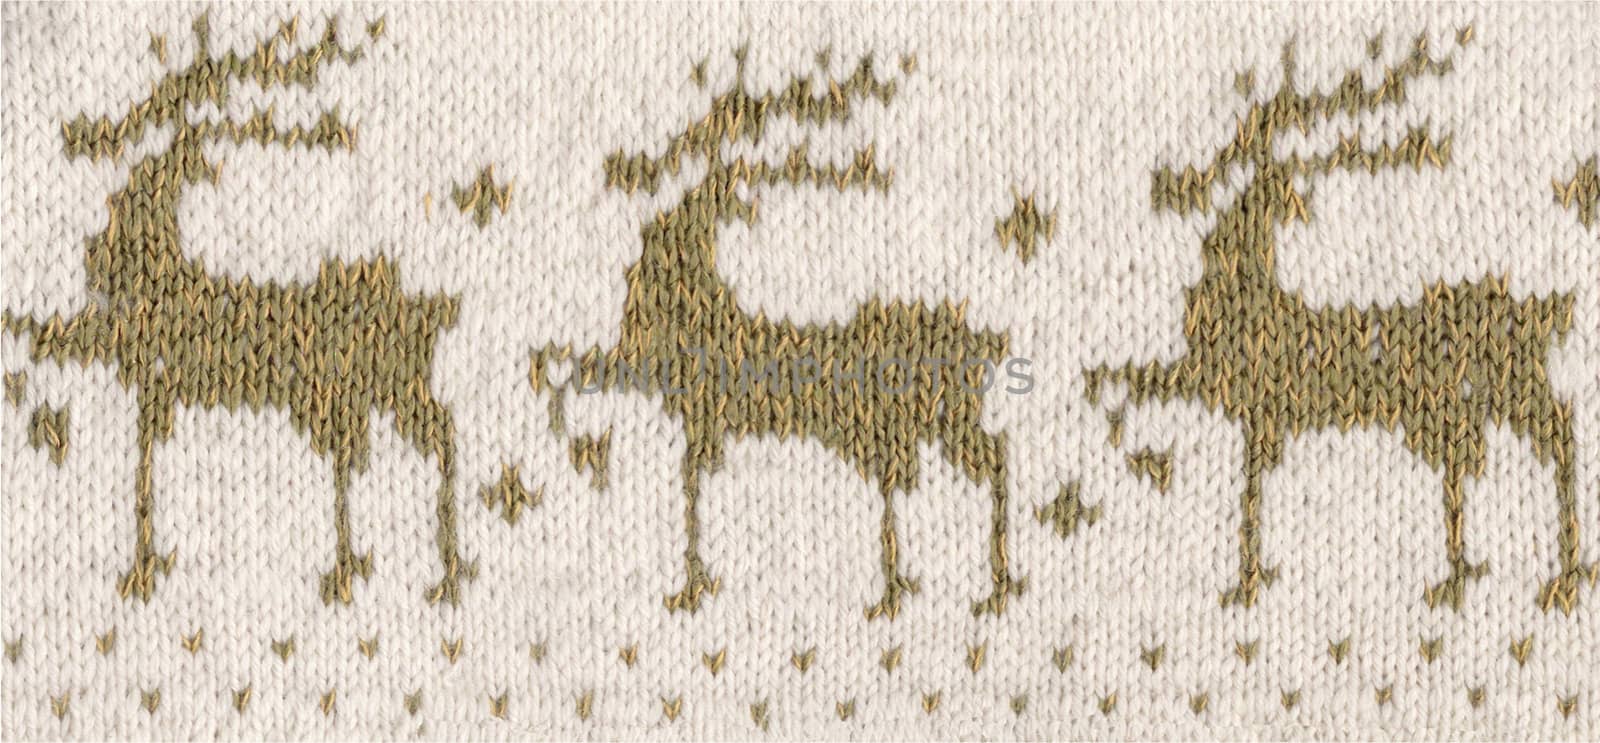 knitted reindeers pattern by vergasova